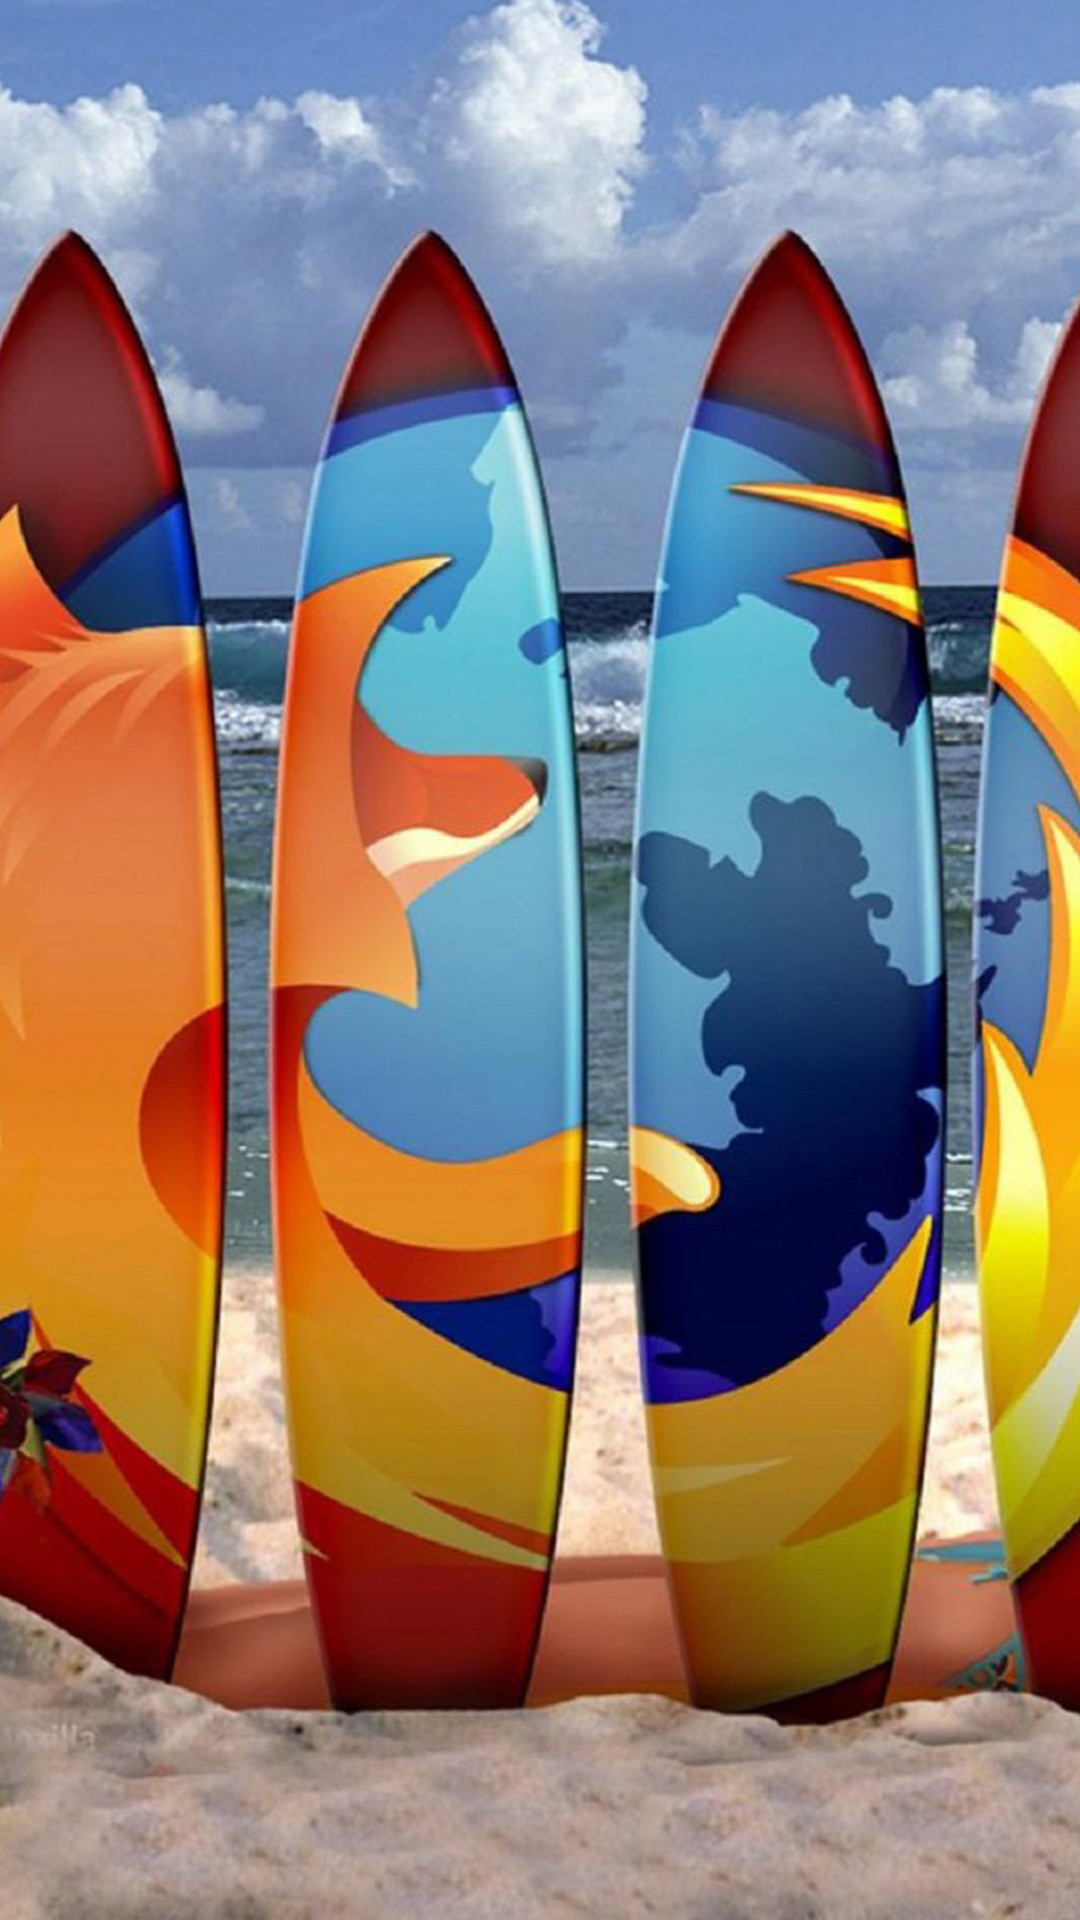 1080x1920 Firefox Surf Boards Beach iPhone 6 Plus HD Wallpaper ...